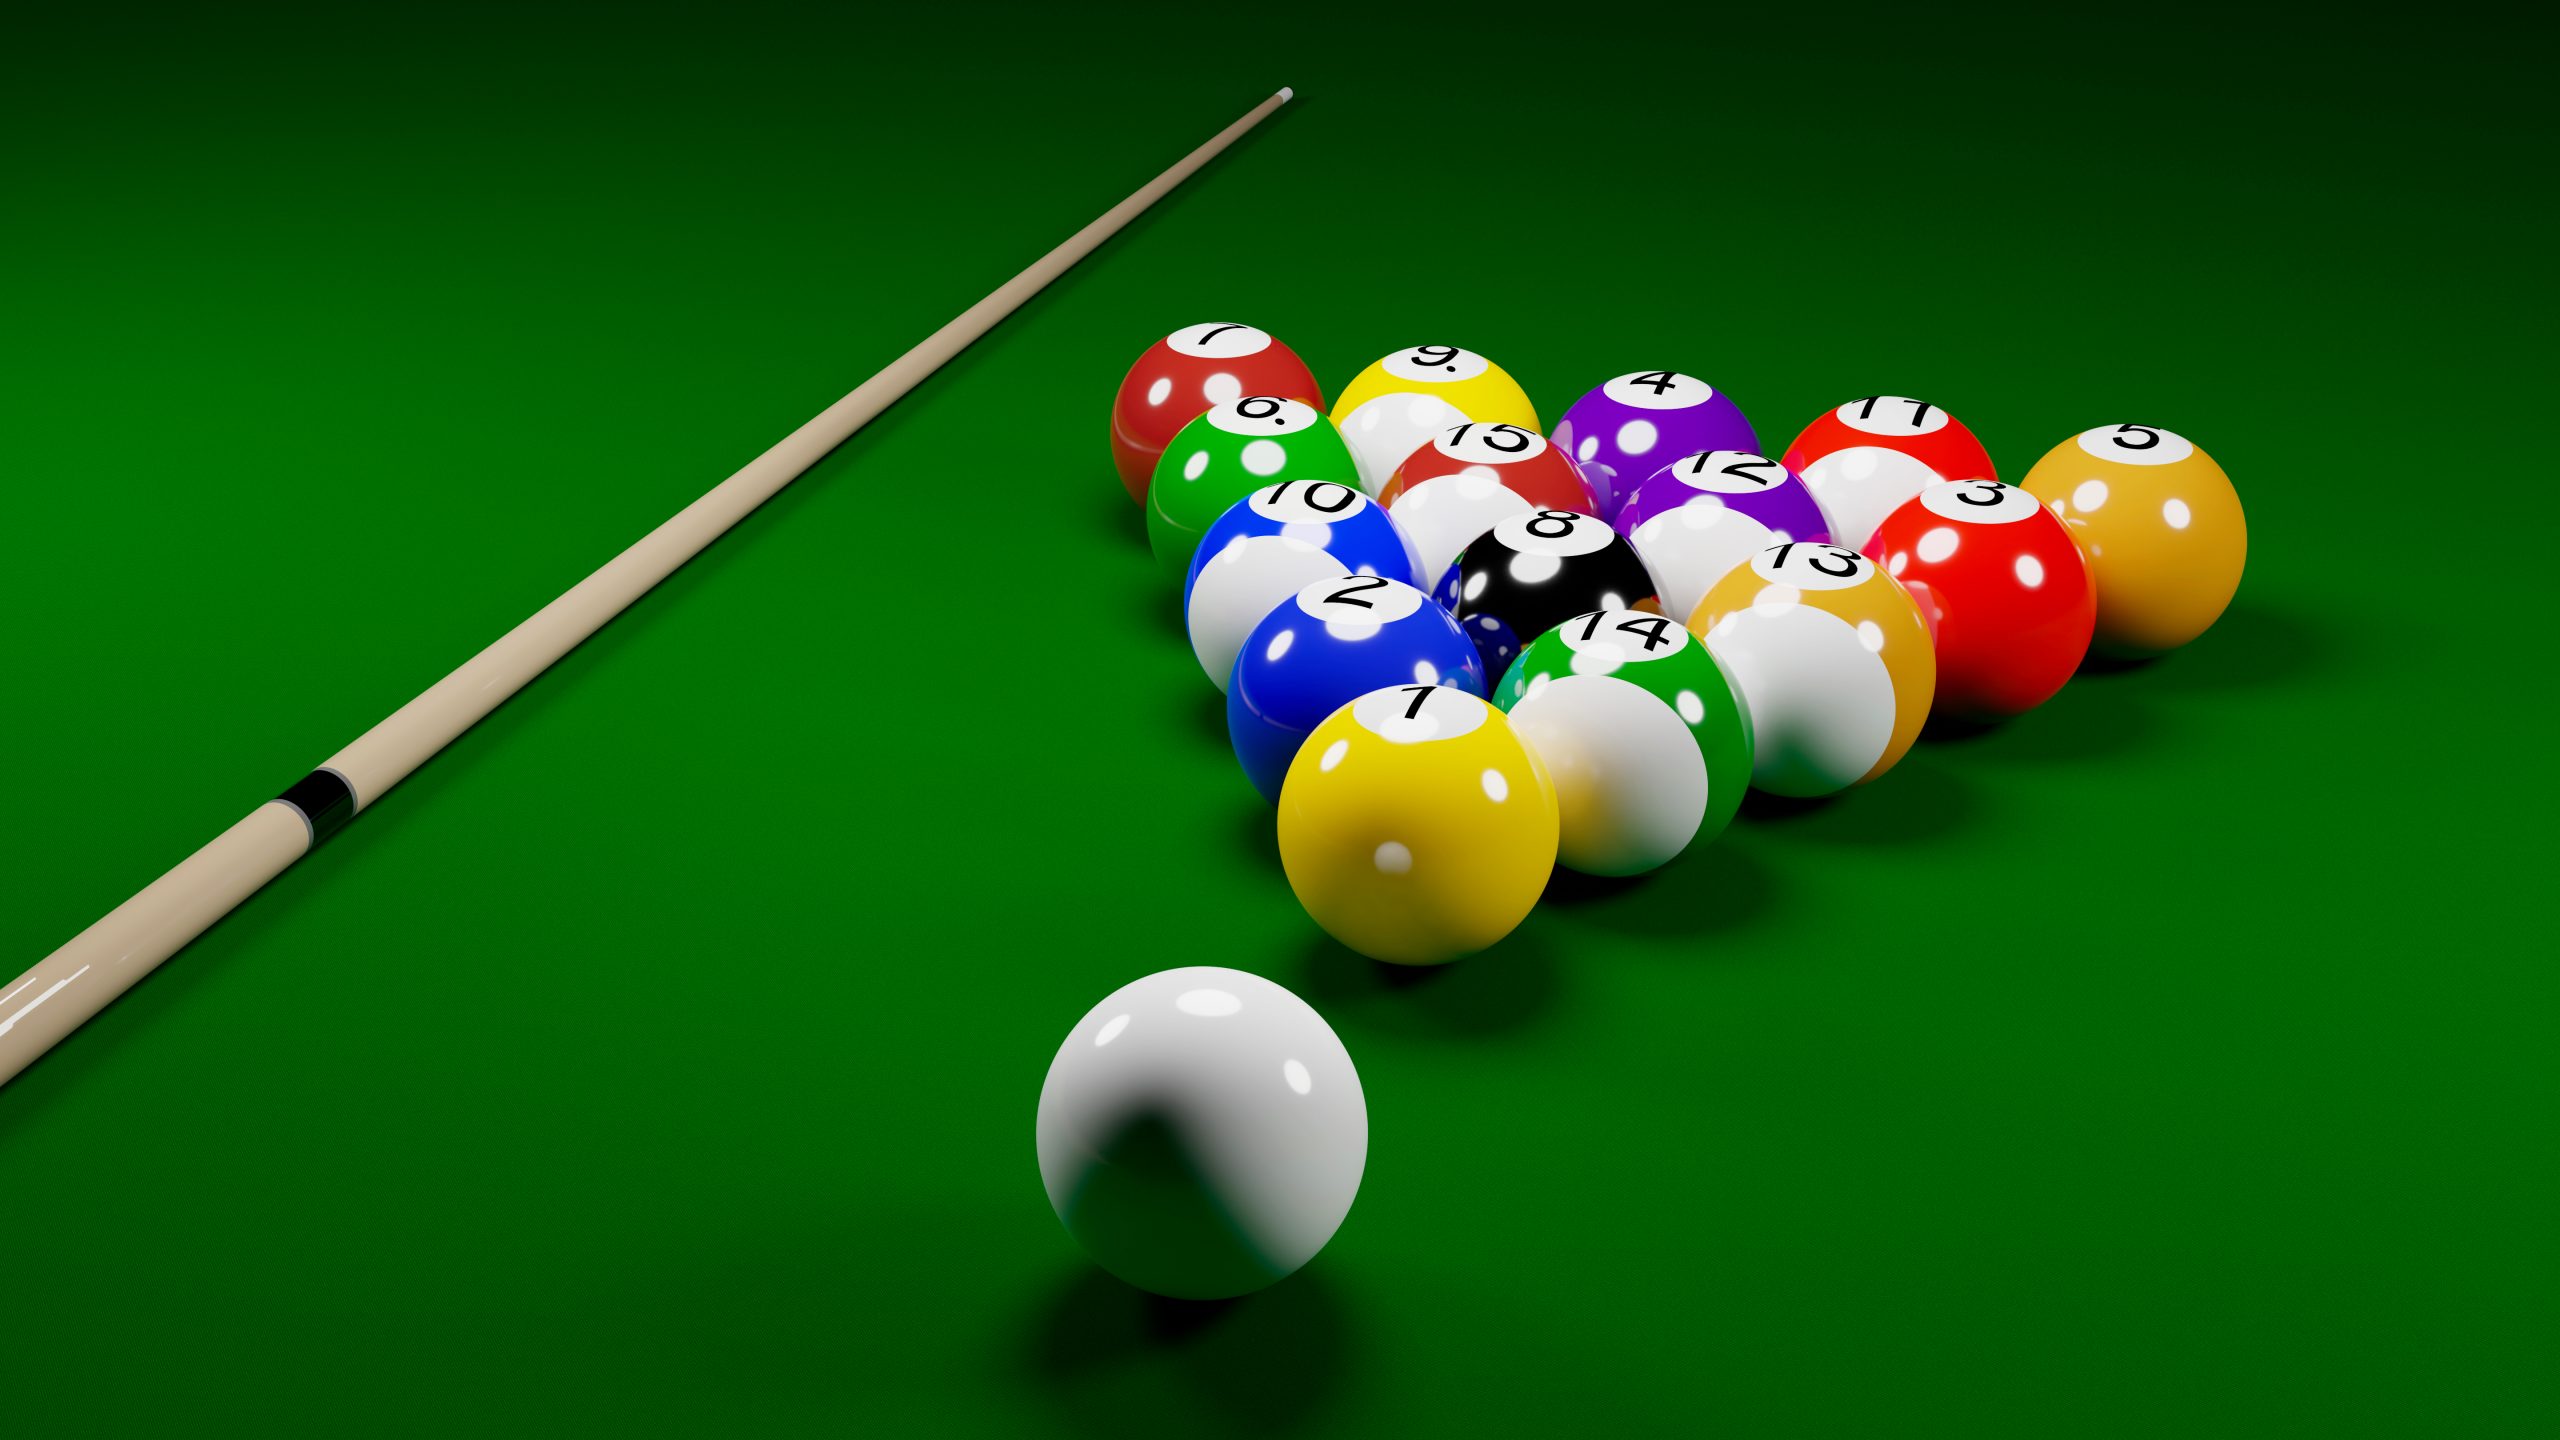 8 pool ball games online play free pc